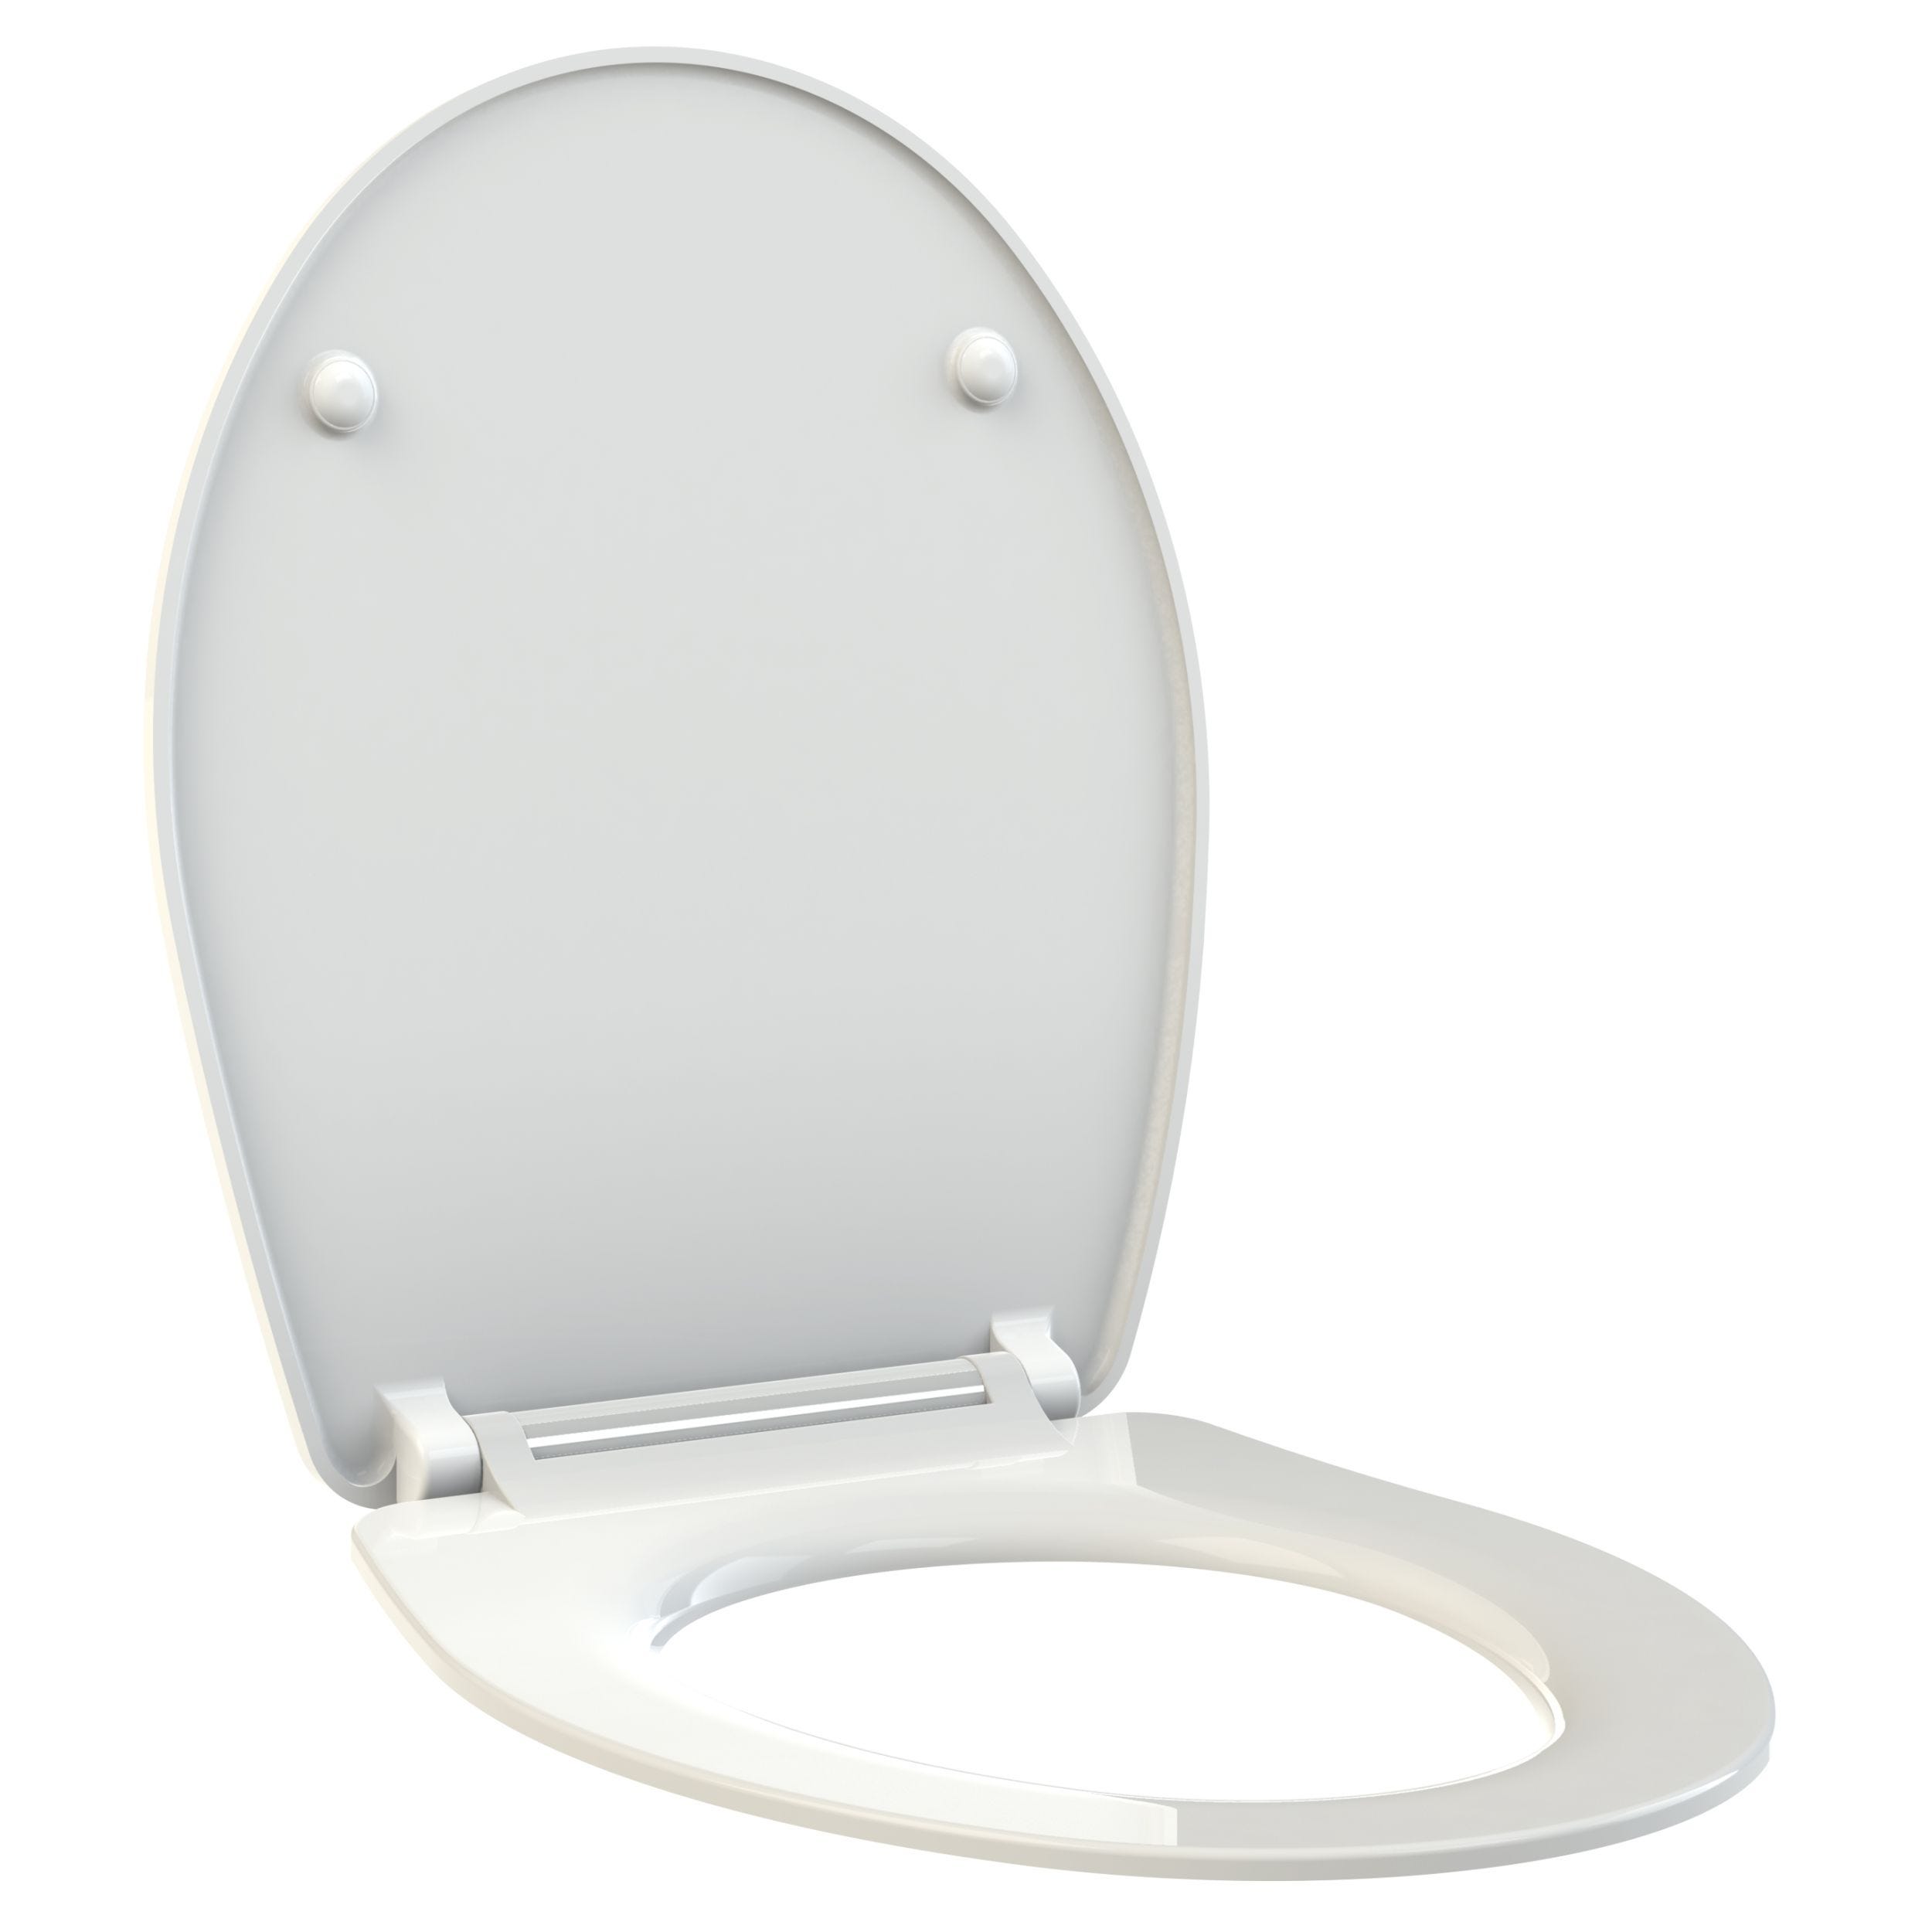 Allibert - Abattant WC design en thermodur FALLY - Blanc - Fally